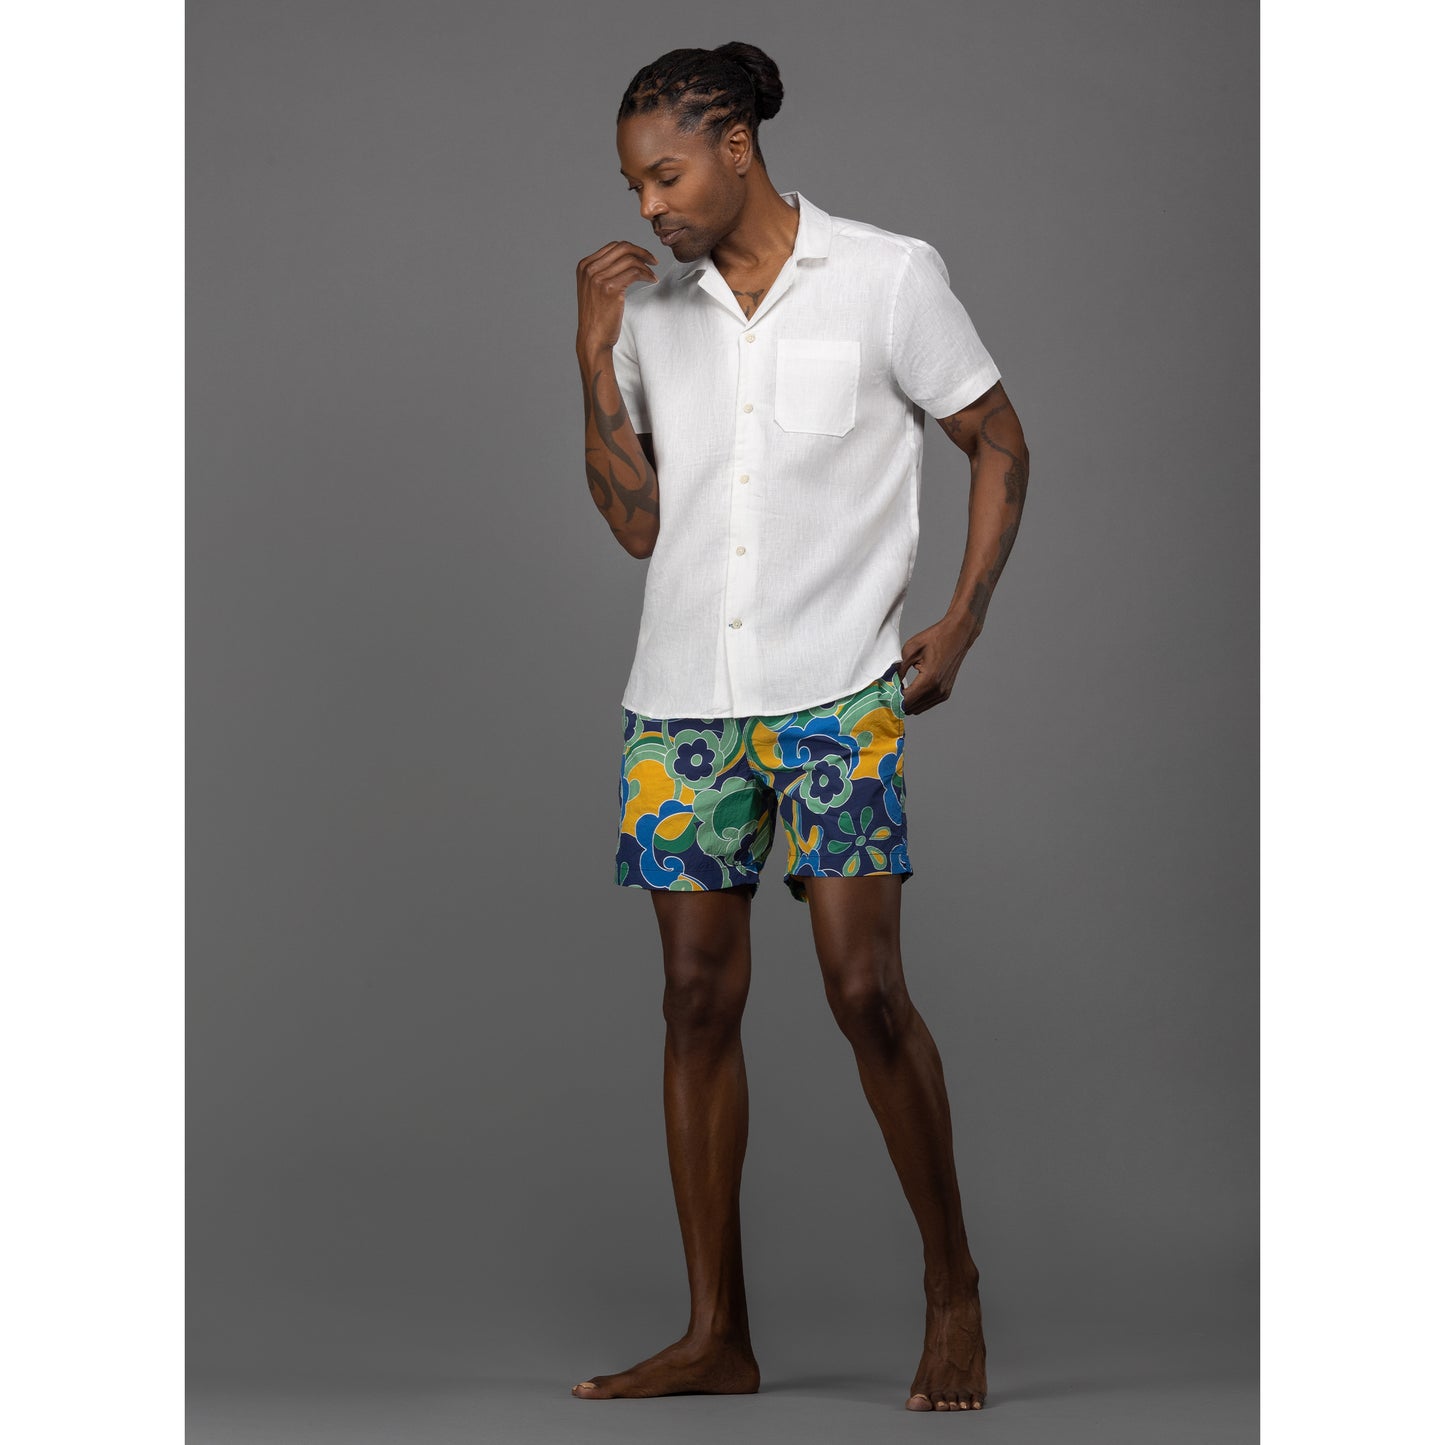 Ultra-Marine Floral Swirl Print Swim Shorts